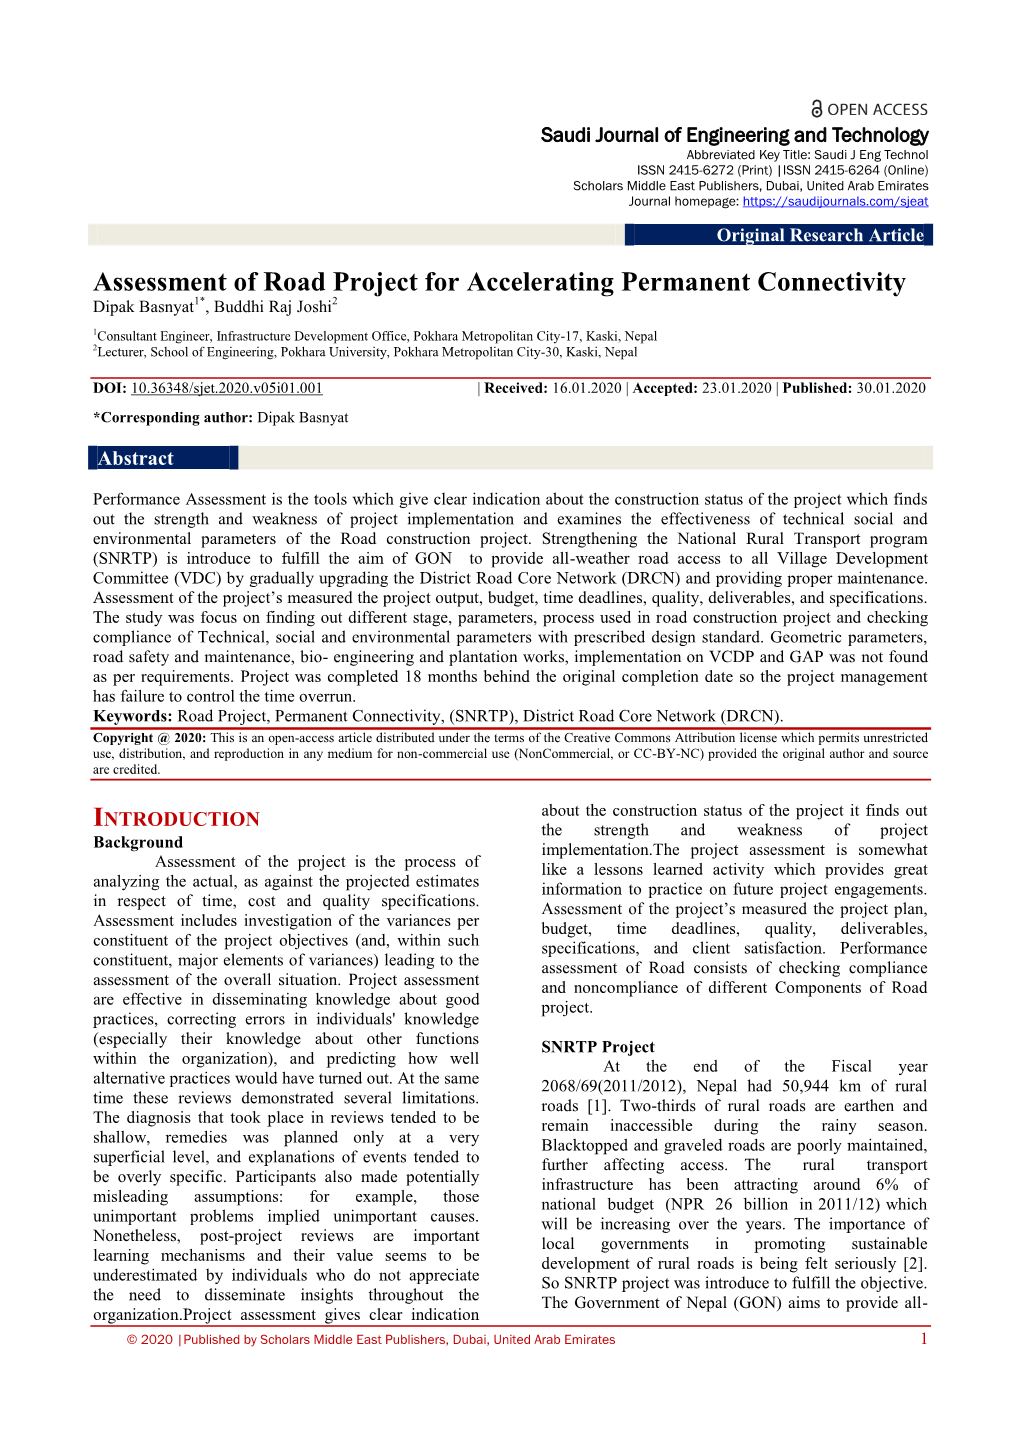 Assessment of Road Project for Accelerating Permanent Connectivity Dipak Basnyat1*, Buddhi Raj Joshi2